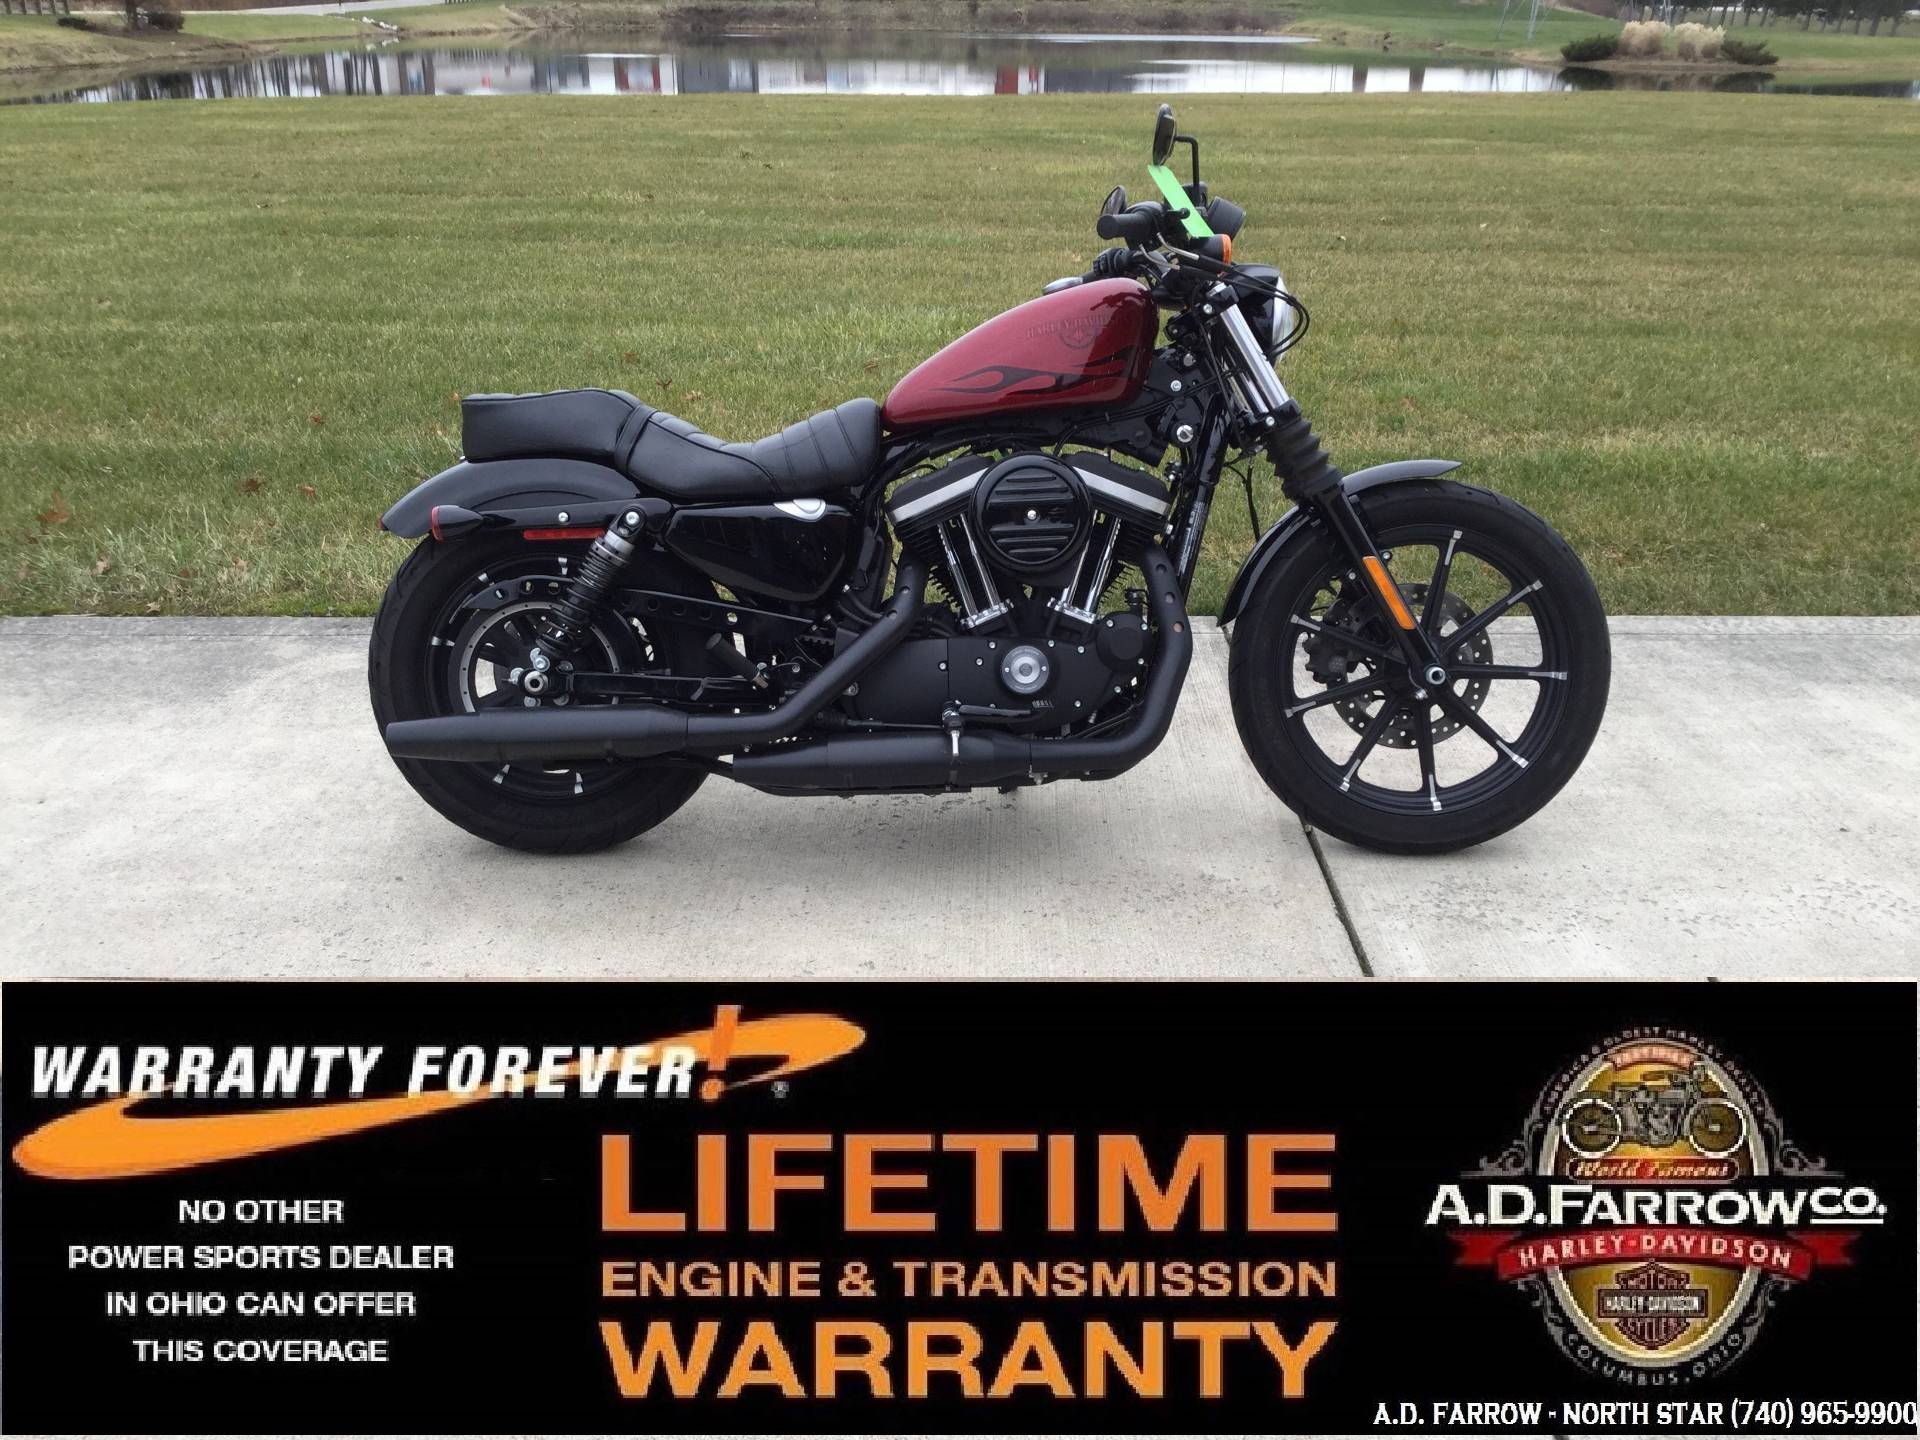 2017 Harley-davidson Iron 883™ In Sunbury, Ohio - 2019 Harley Davidson Road King Special , HD Wallpaper & Backgrounds